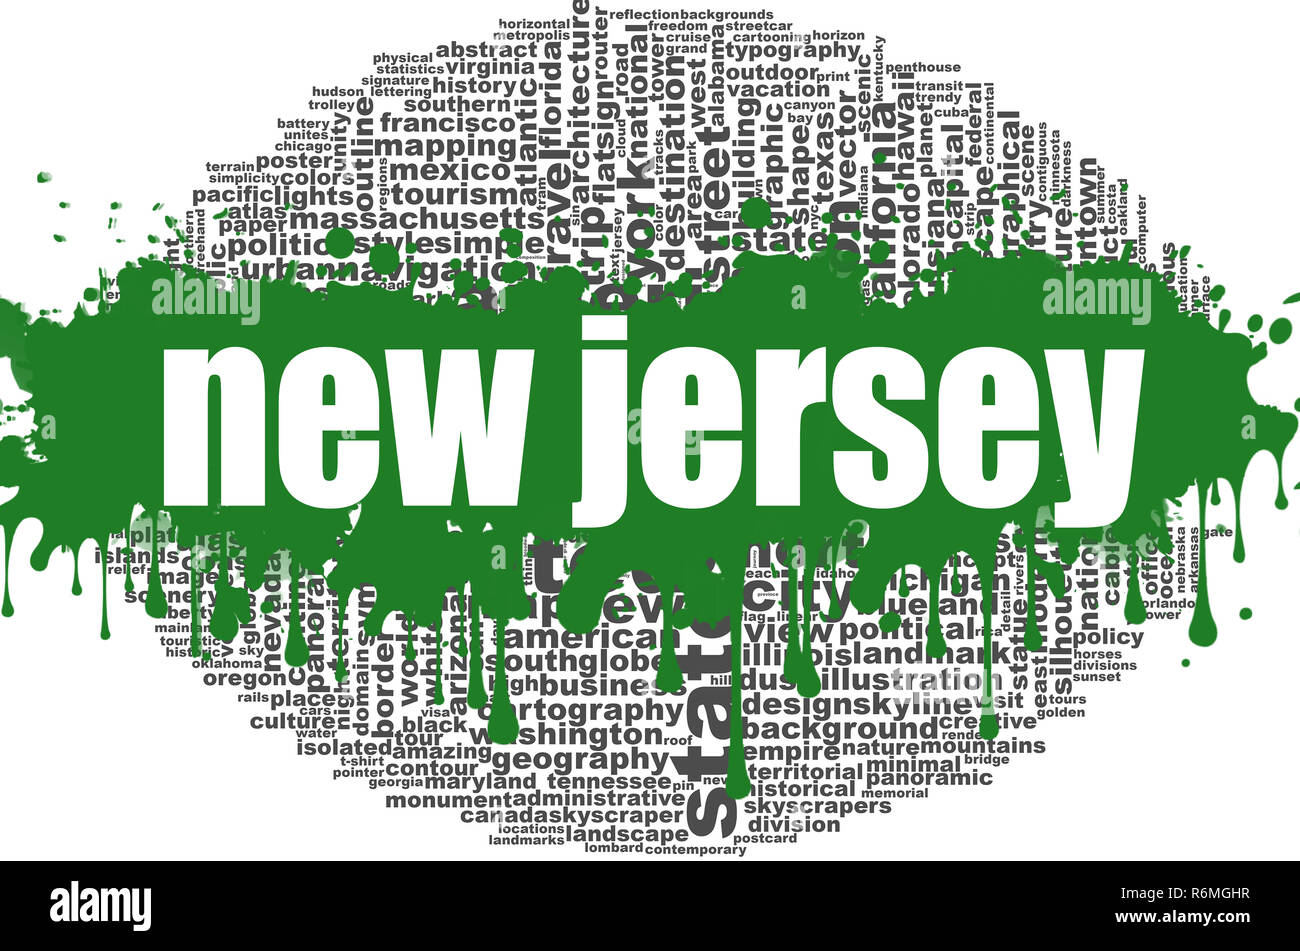 New Jersey word cloud design Stock Photo - Alamy